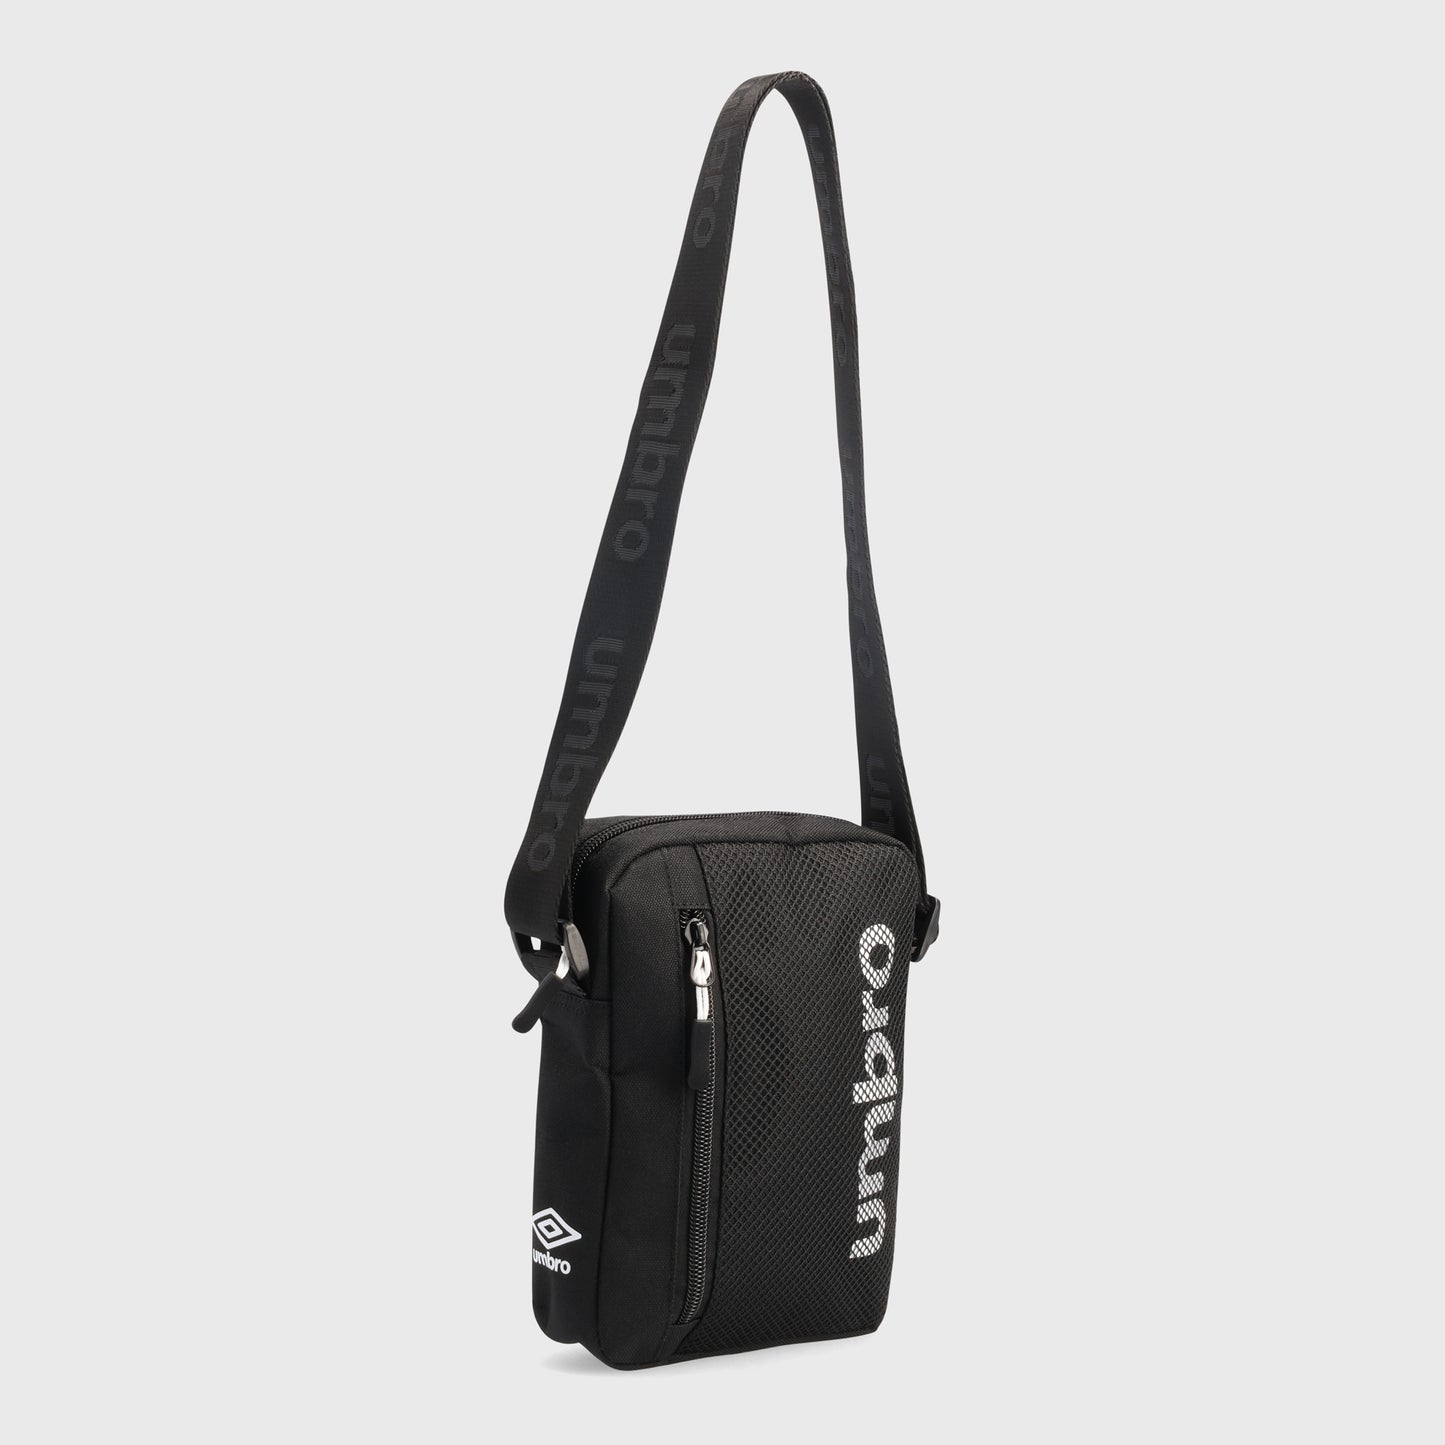 Umbro Unisex Crossbody Bag Black _ 181840 _ Black